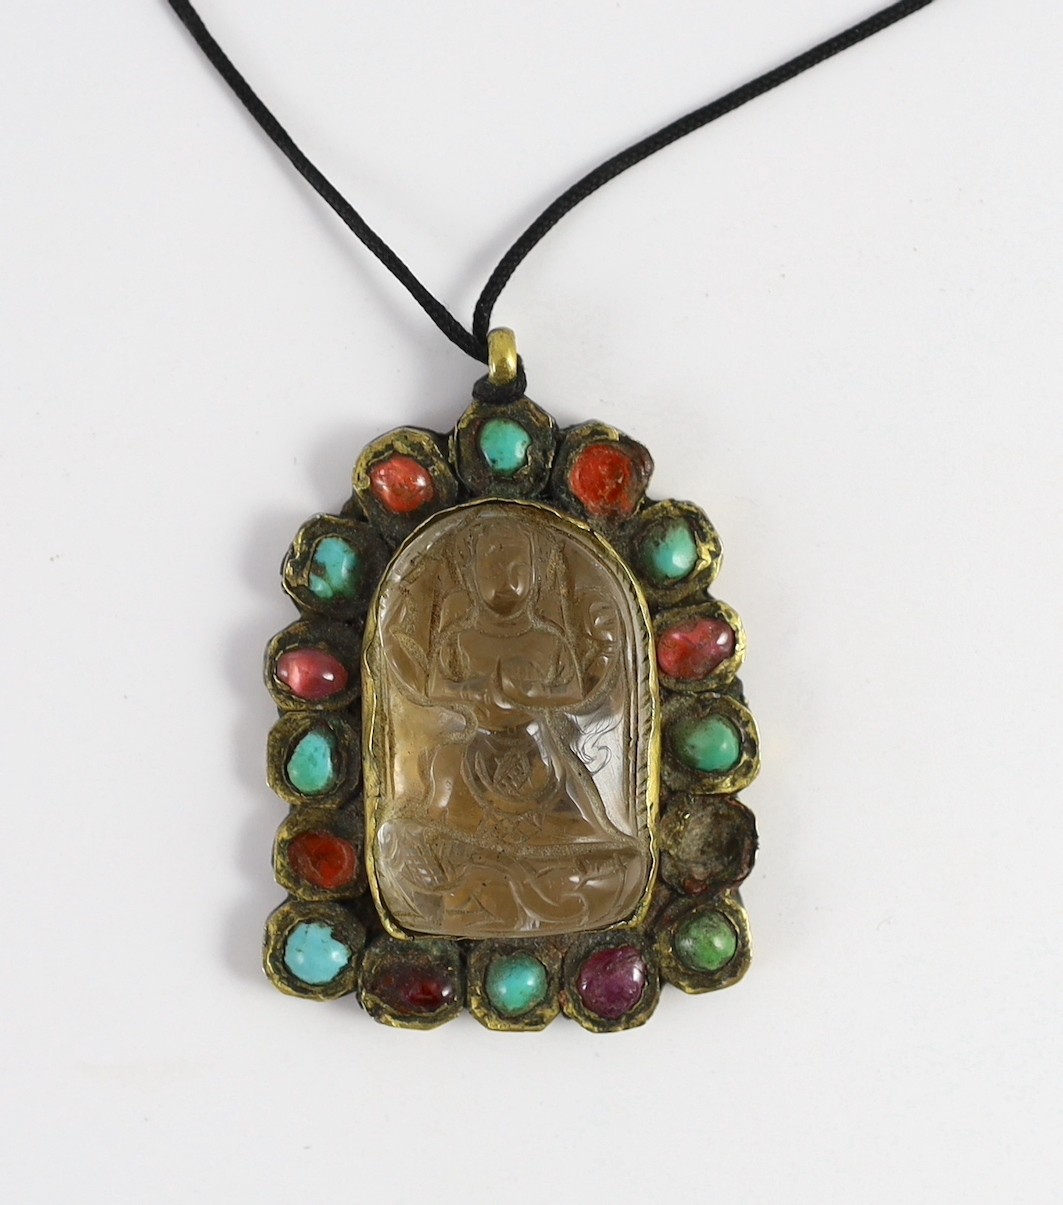 A Tibetan rock crystal and gem set pendant, 19th century, 5.8cm including suspension loop, slight damage